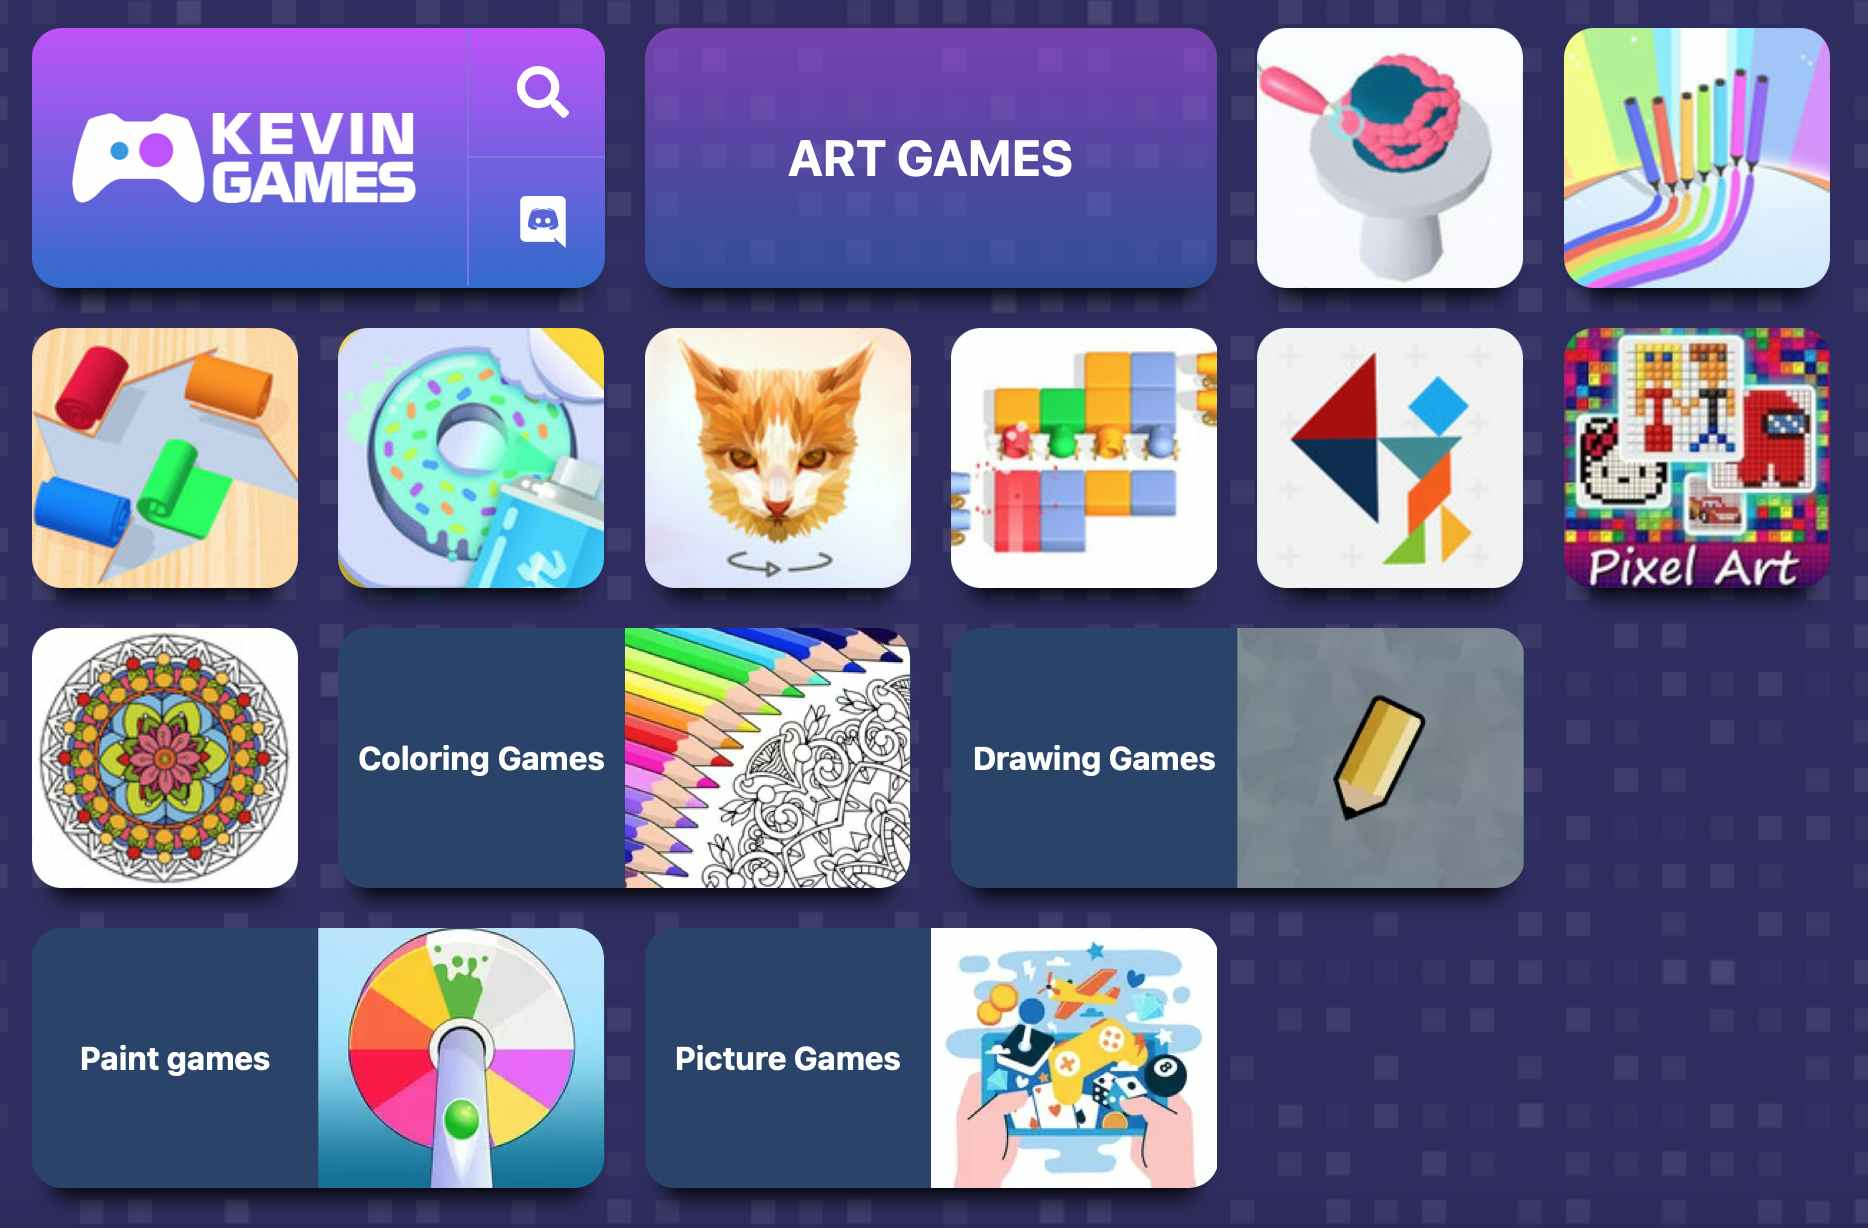 Free Online Art Games & Apps for Kids